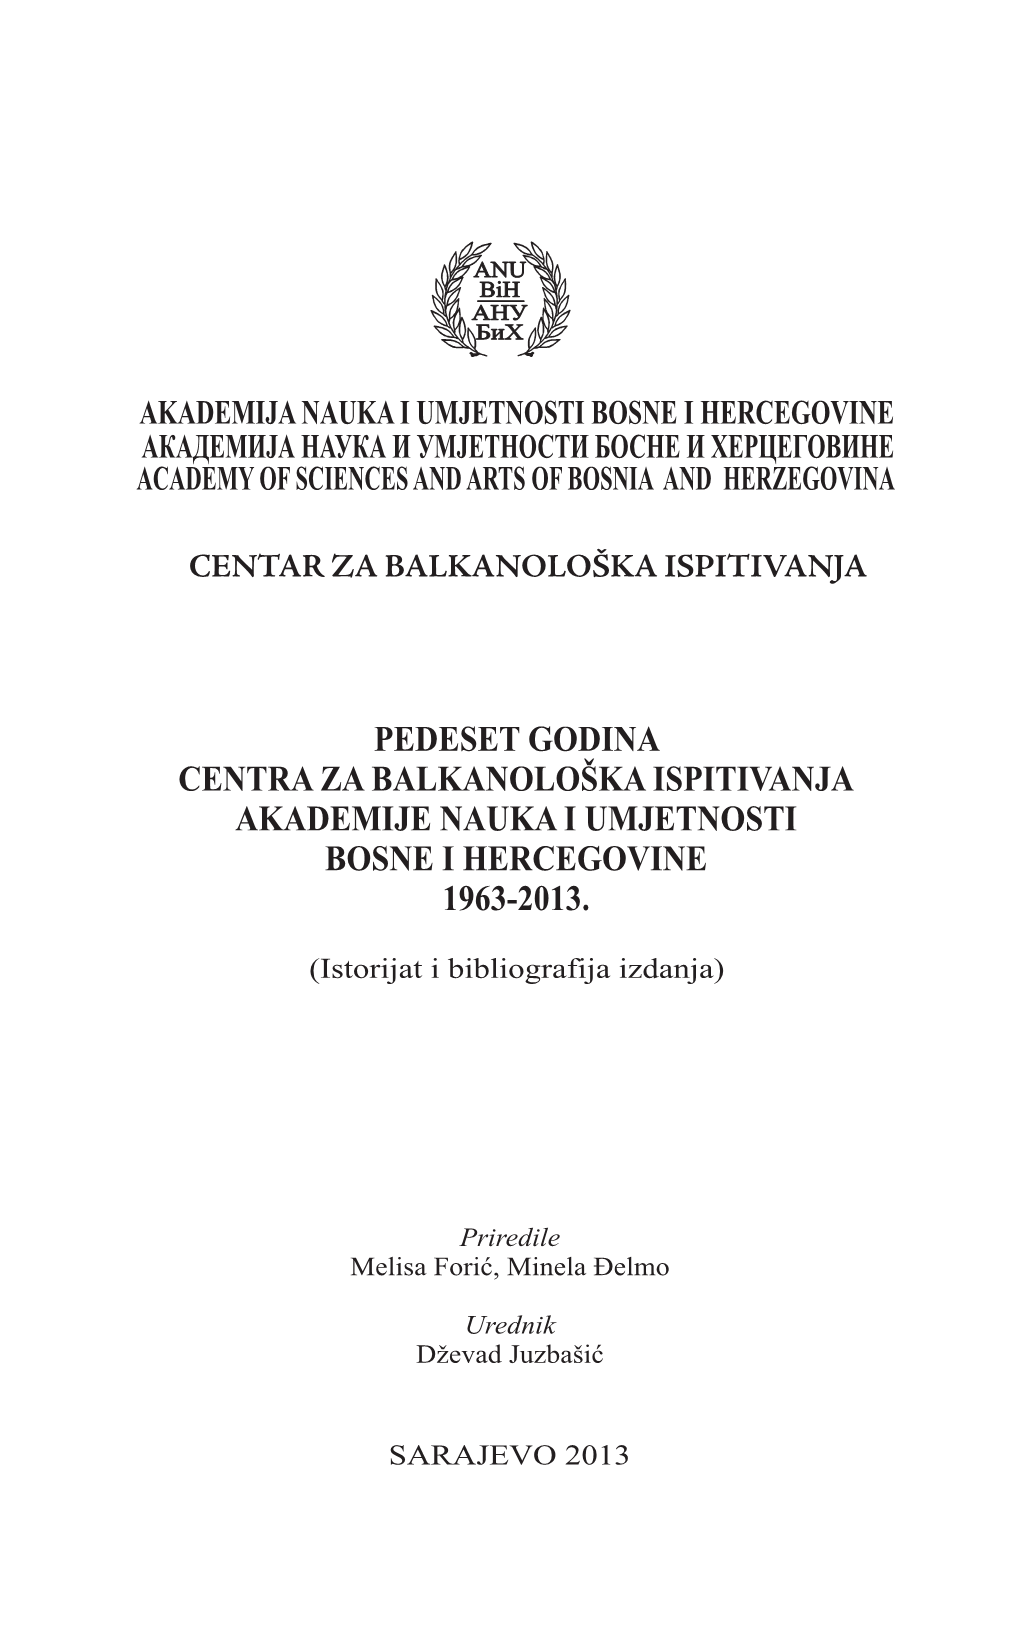 50 Godina Centra Za Balkanološka Ispitivanja Anubih / 50 Years of the Centre for Balkan Studies of the Academy of Sciences and Arts of Bosnia and Herzegovina